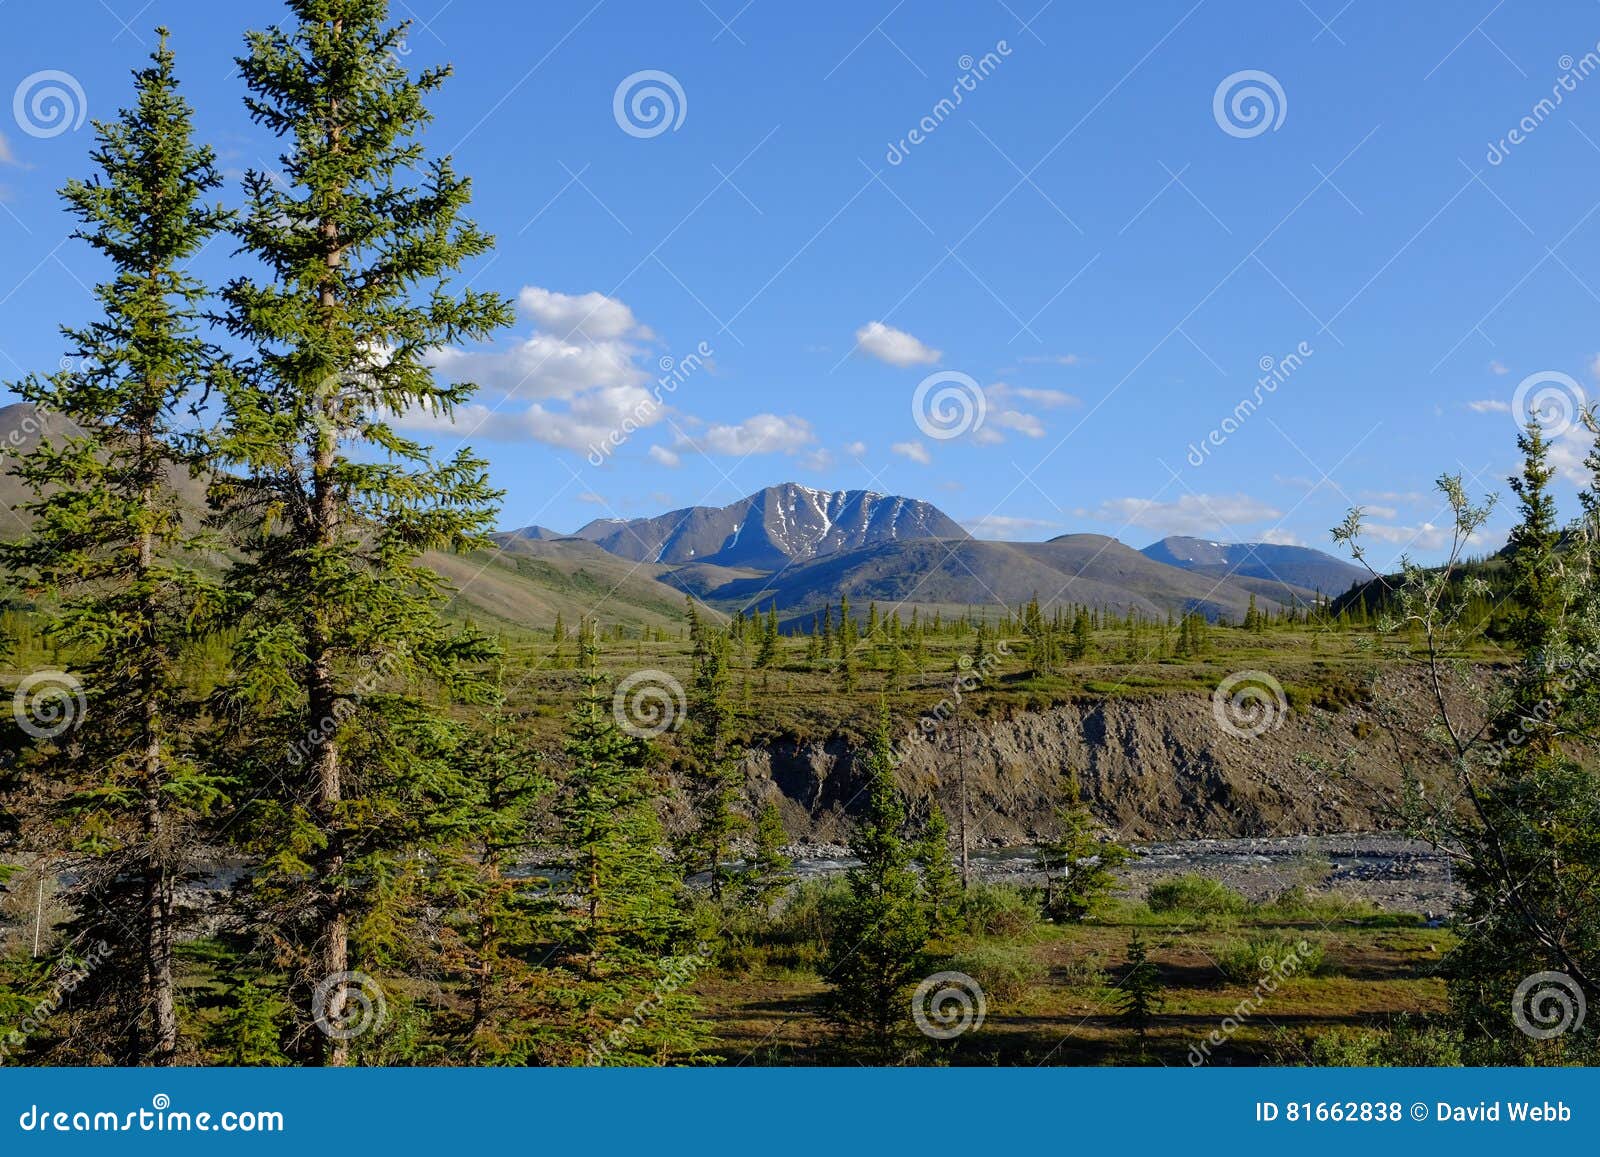 mountain of ivvavik national park